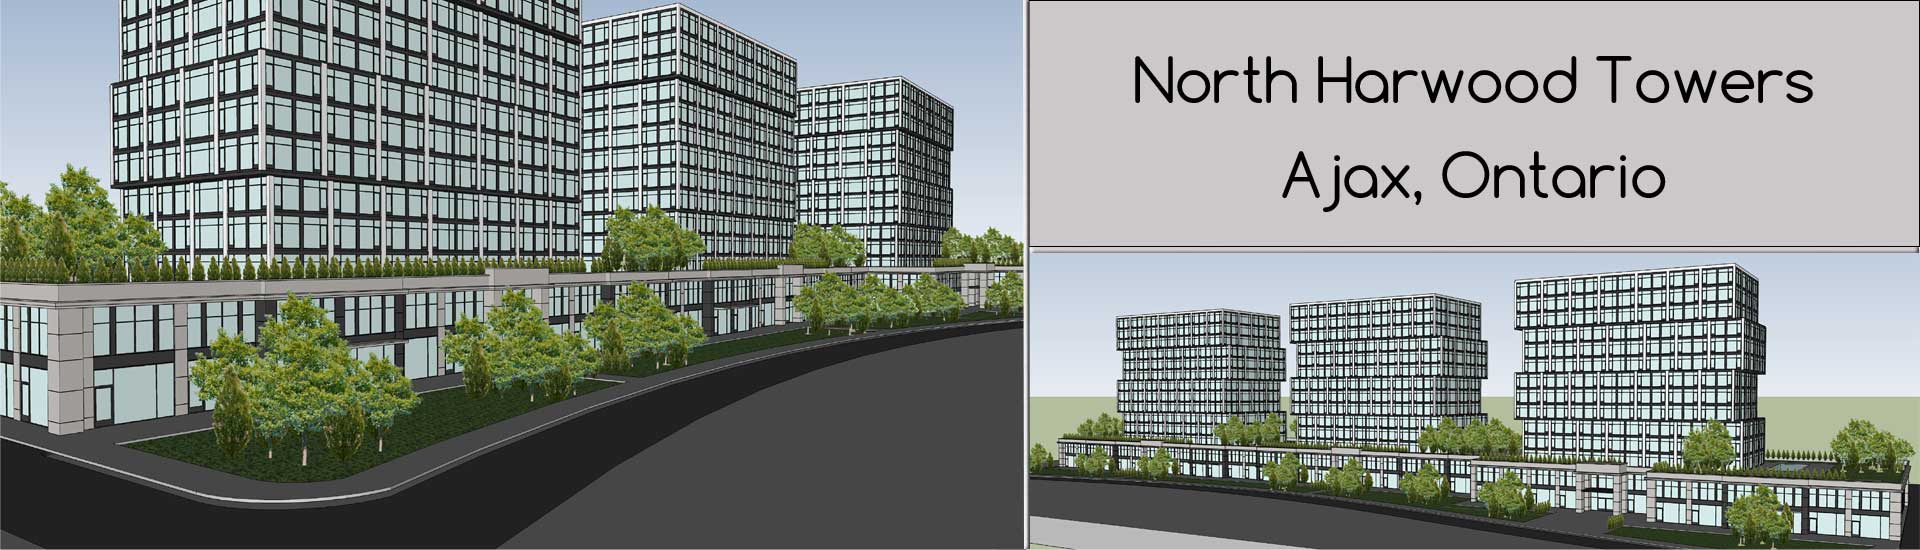 New Condominium North Harwood Towers, Ajax, Ontario